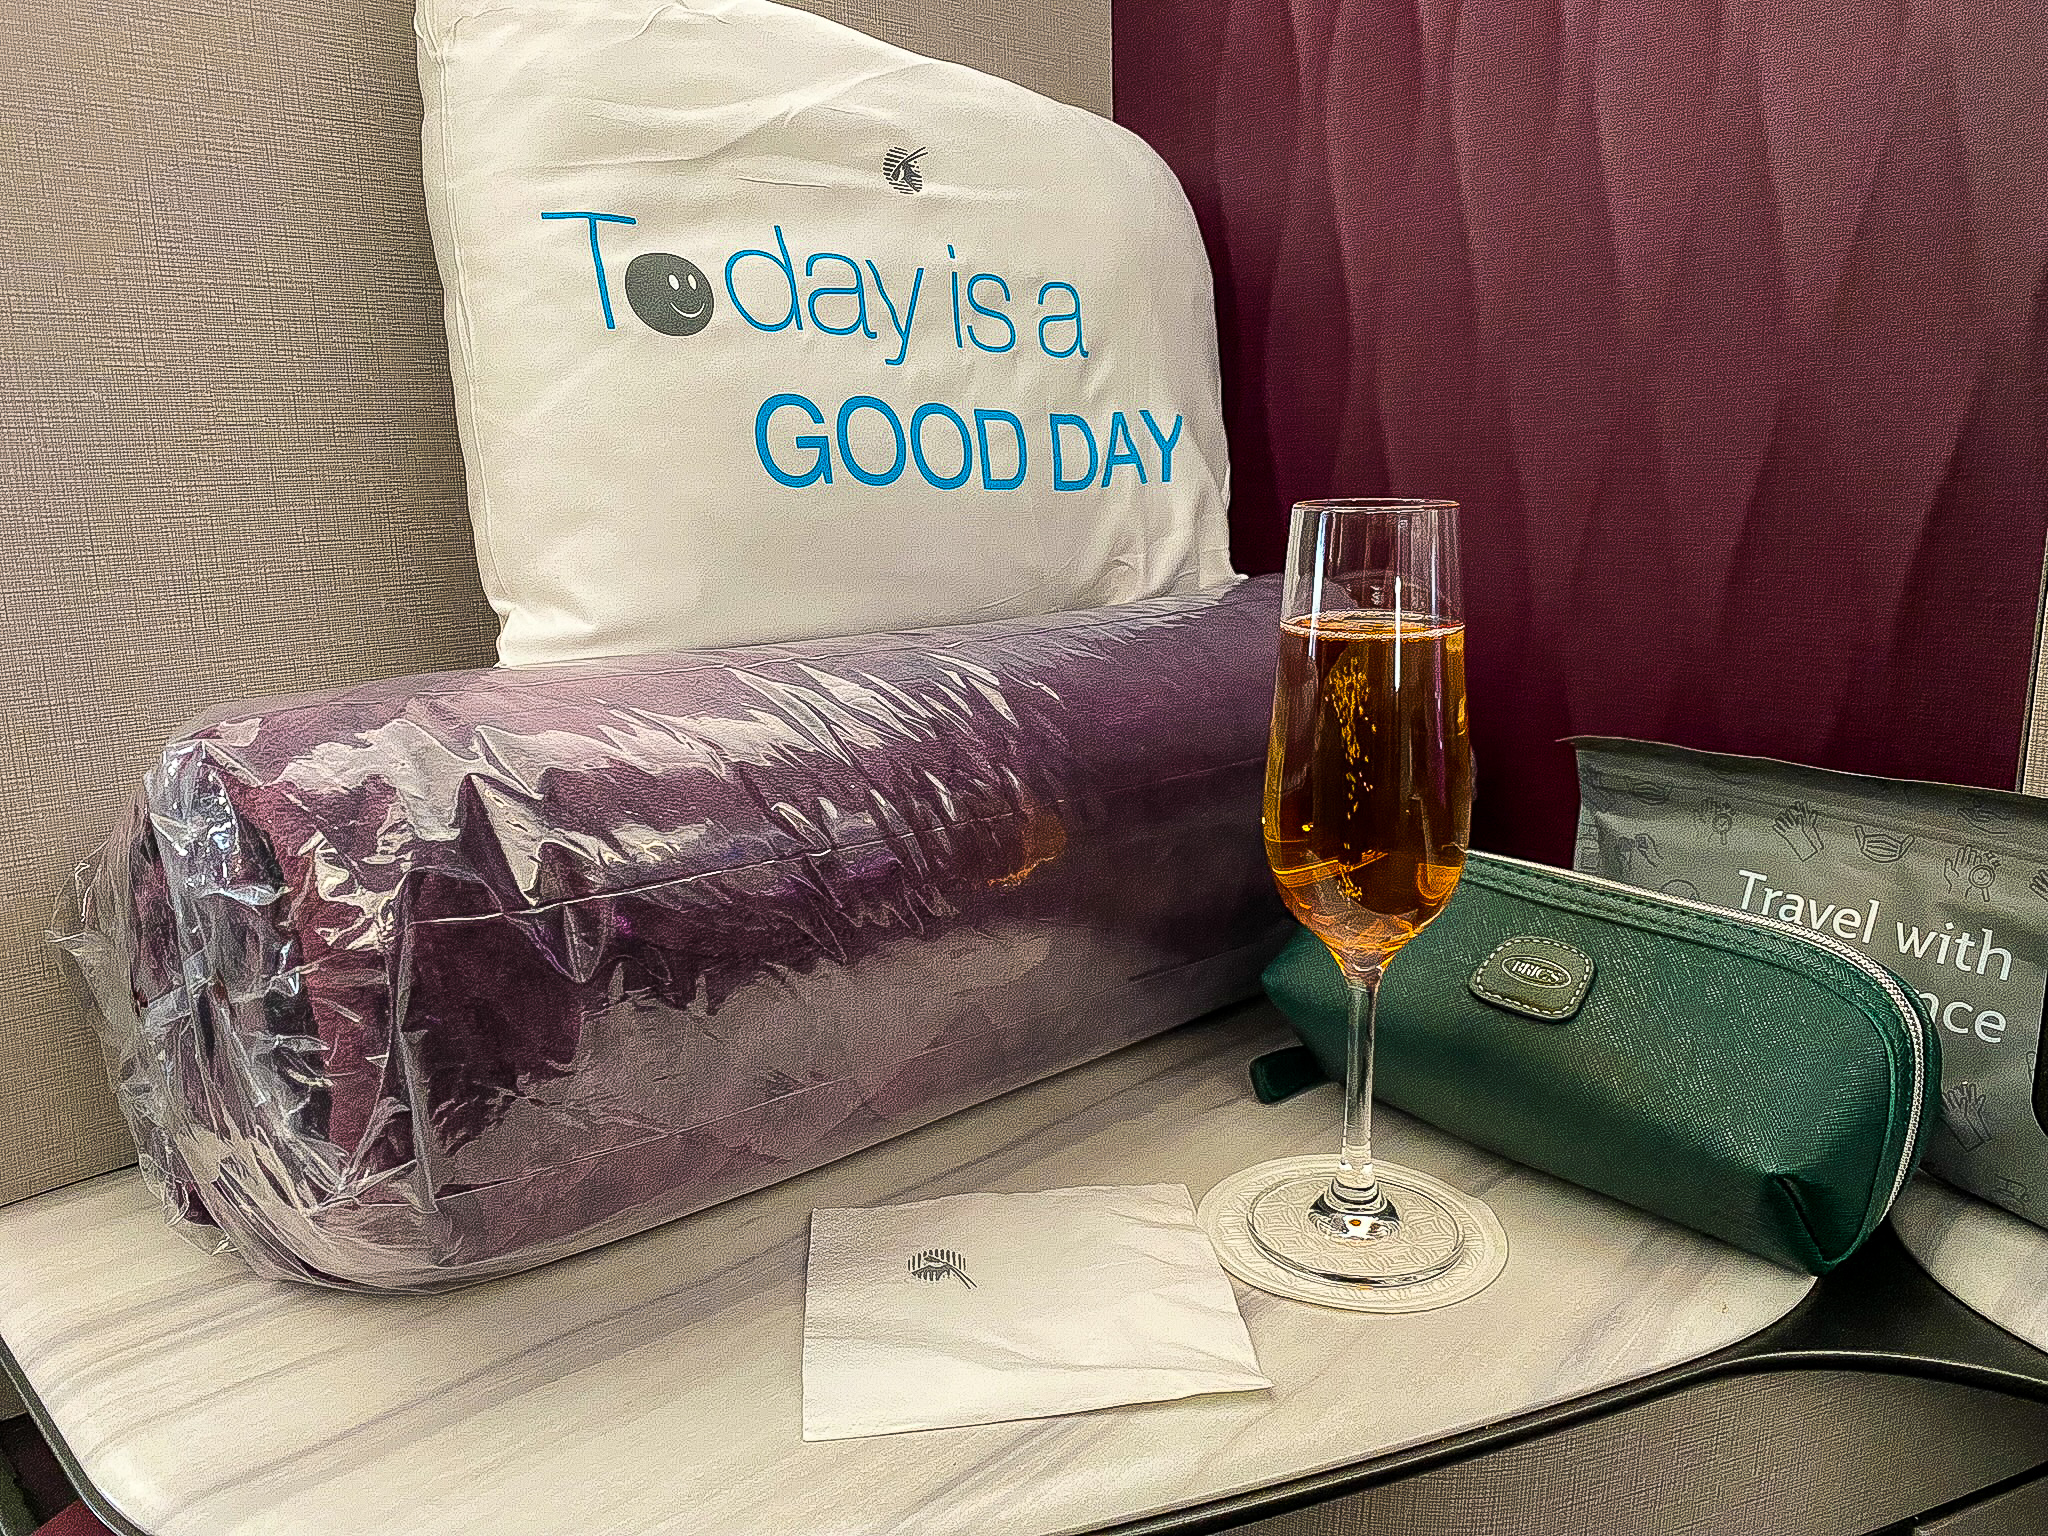 Qatar Airways Qsuites pillow comforter amenity kit